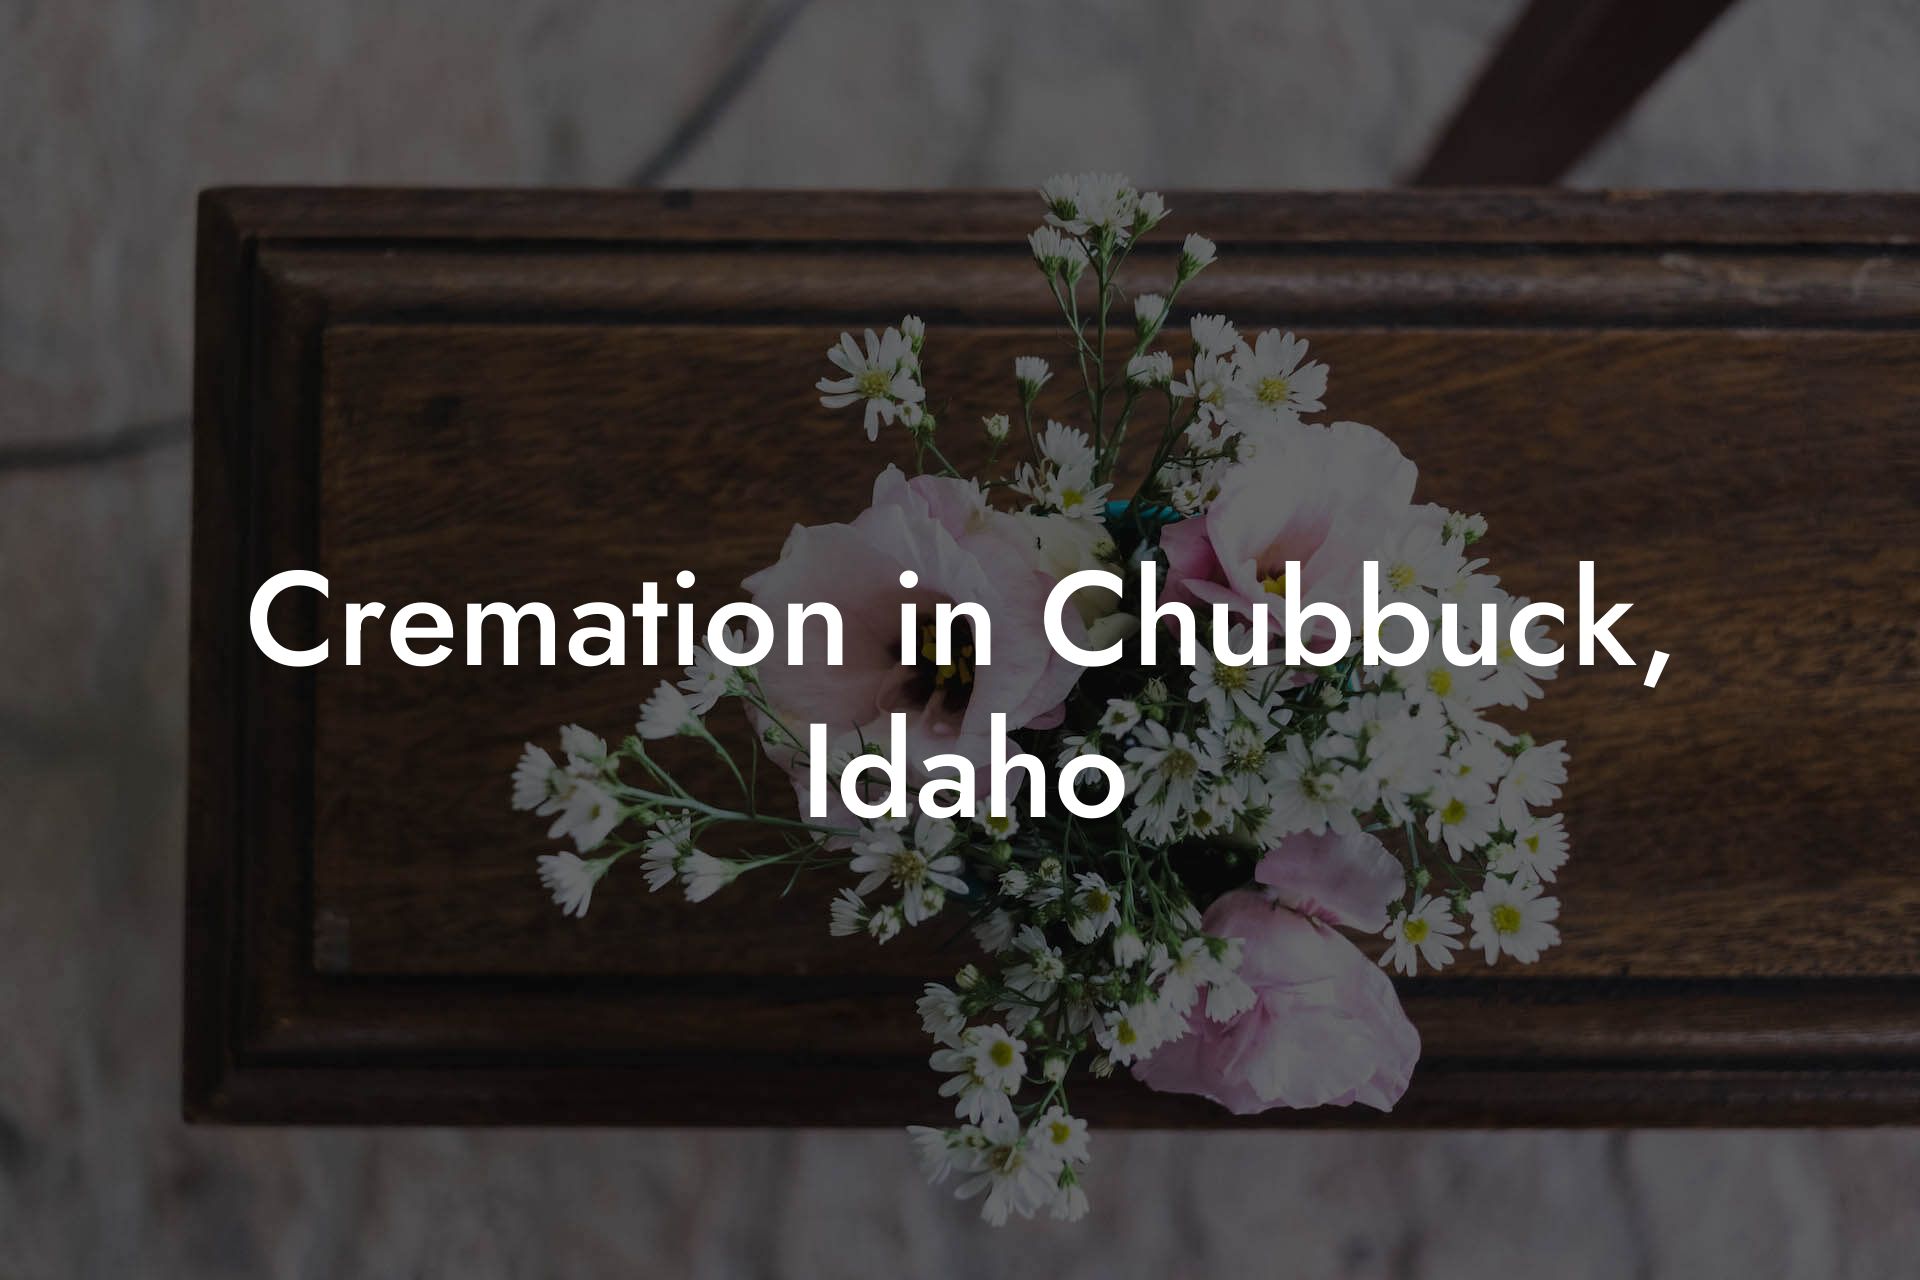 Cremation in Chubbuck, Idaho